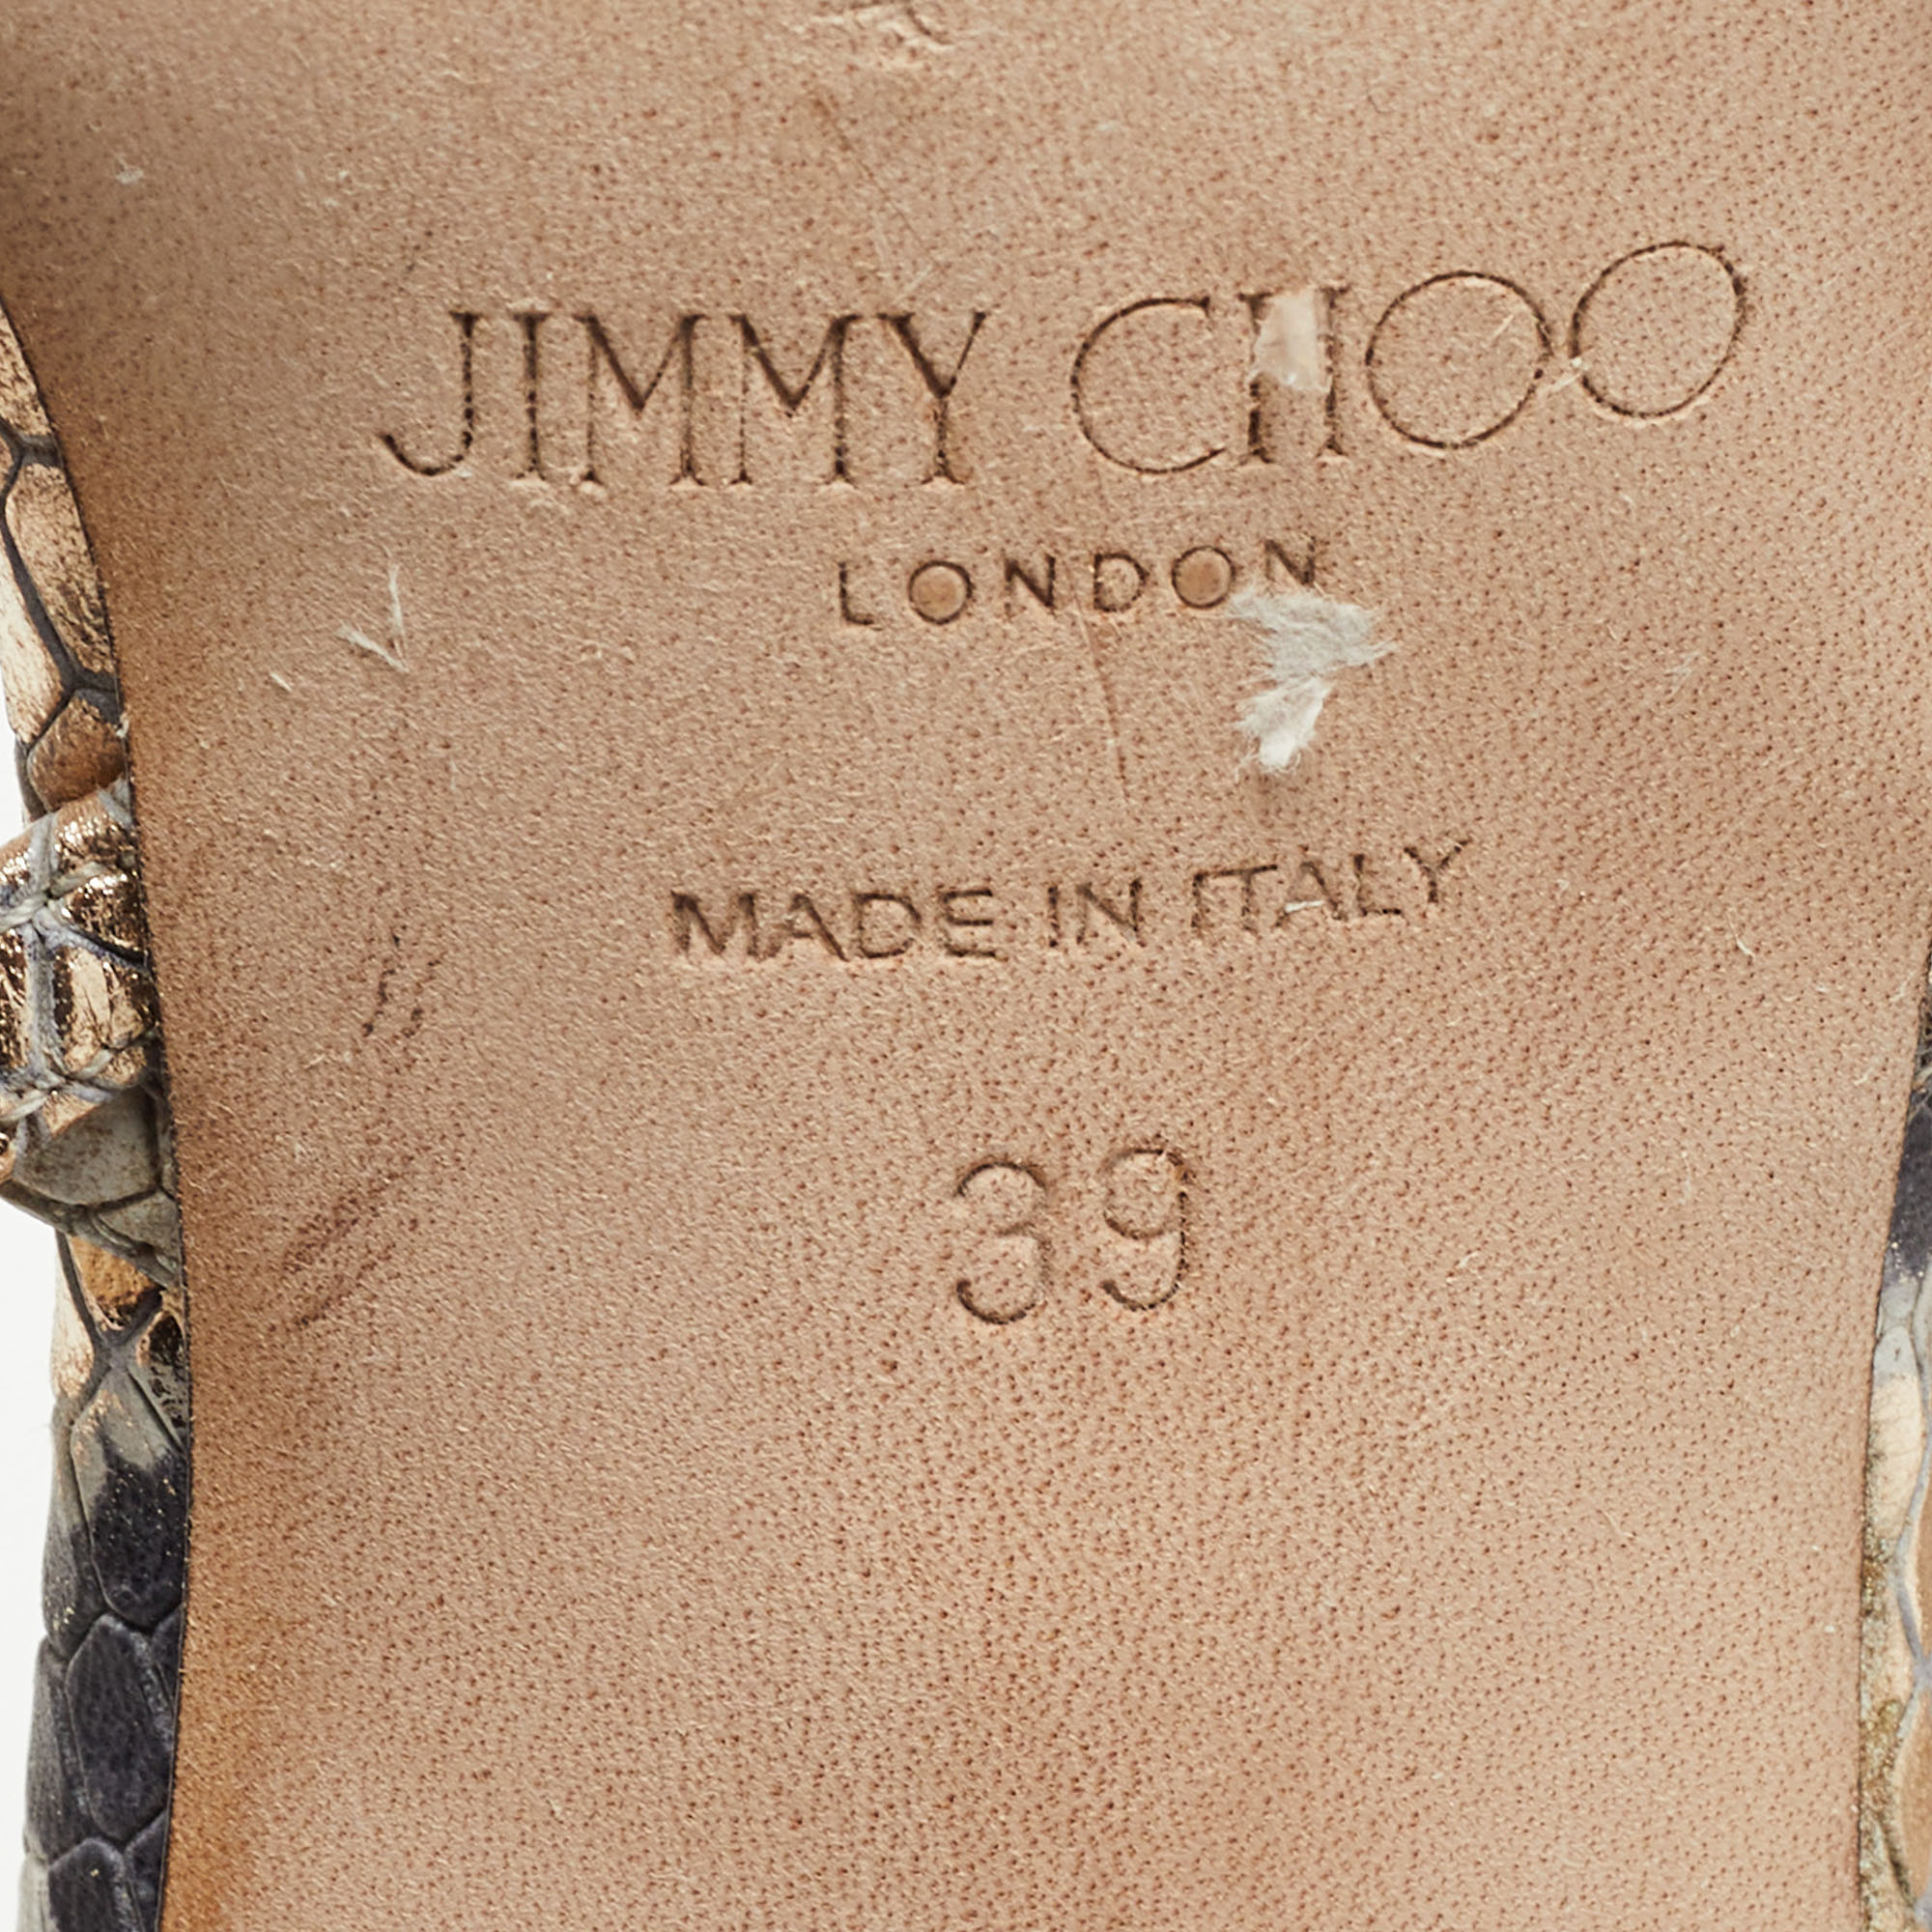 Jimmy Choo Beige/Grey Python Embossed Sai Sandals Size 39